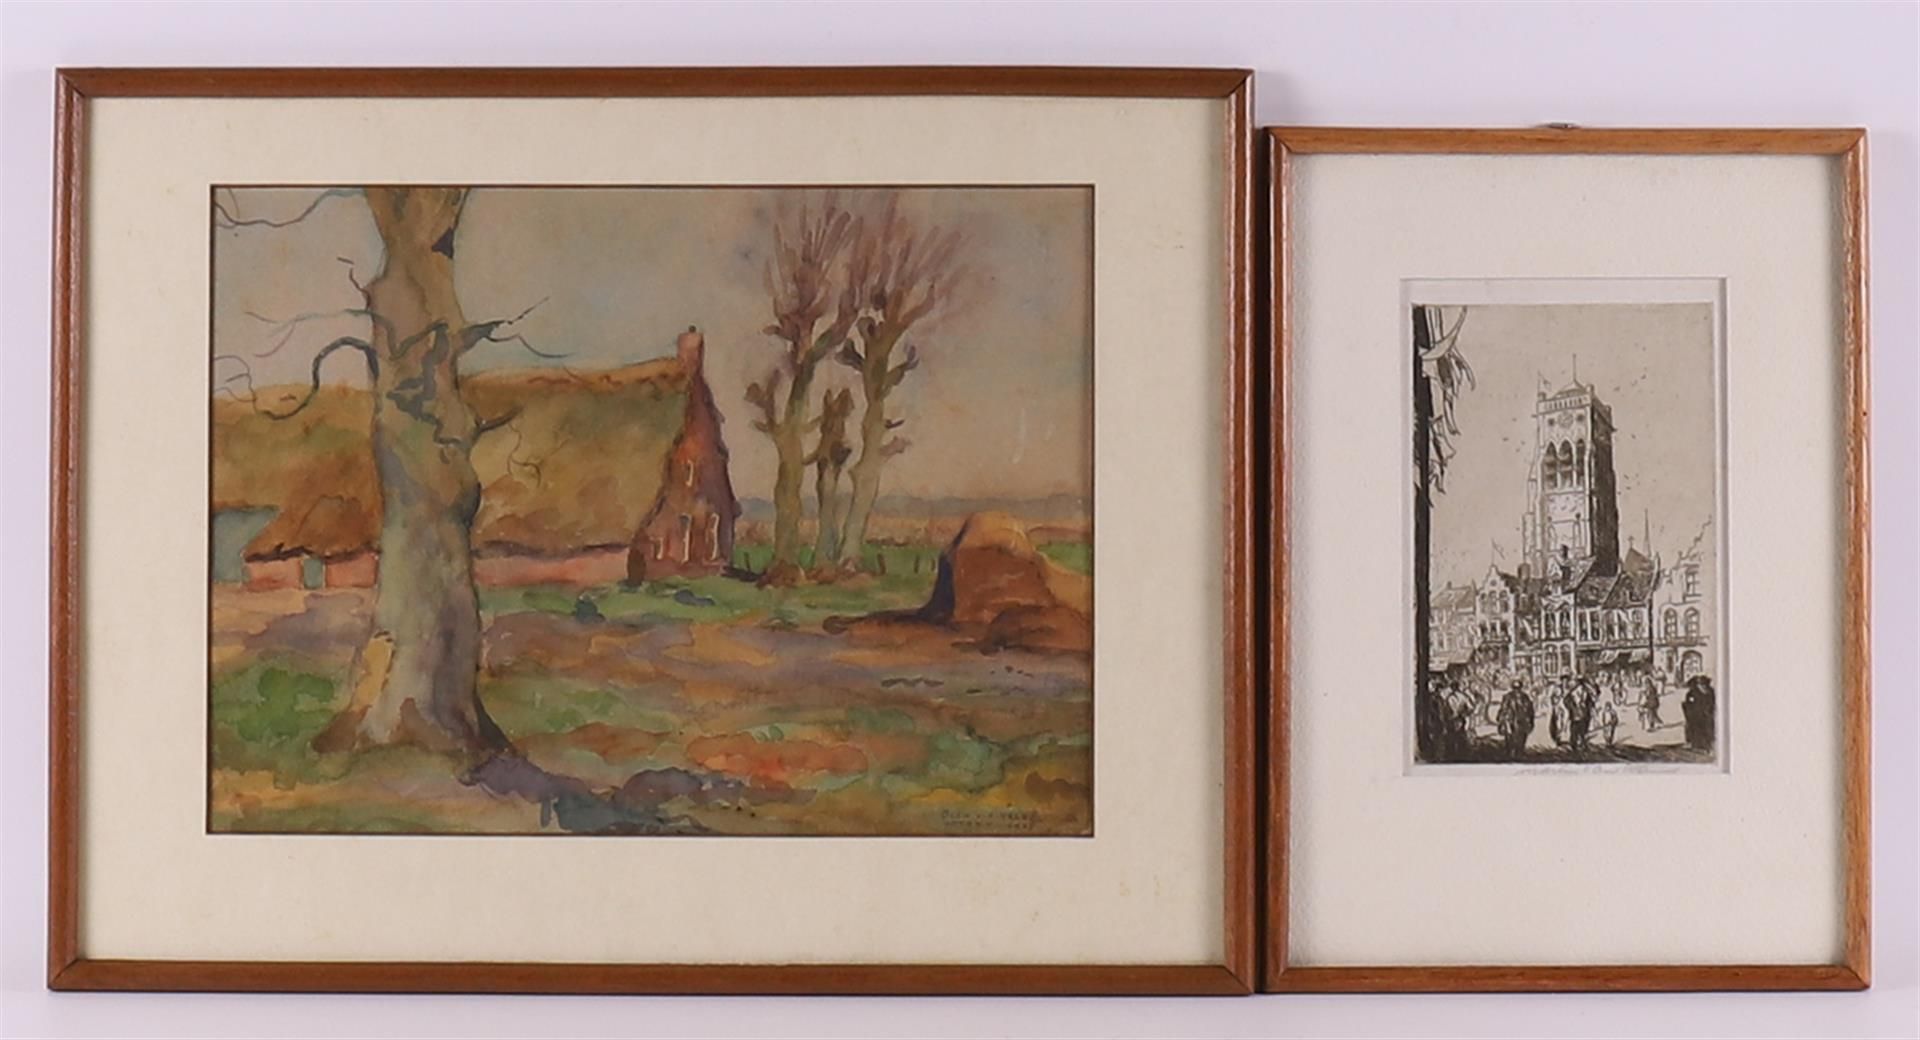 Velden Blok van der, Adrianus Dirk (Ad) (1913-1980) 'View of a farm